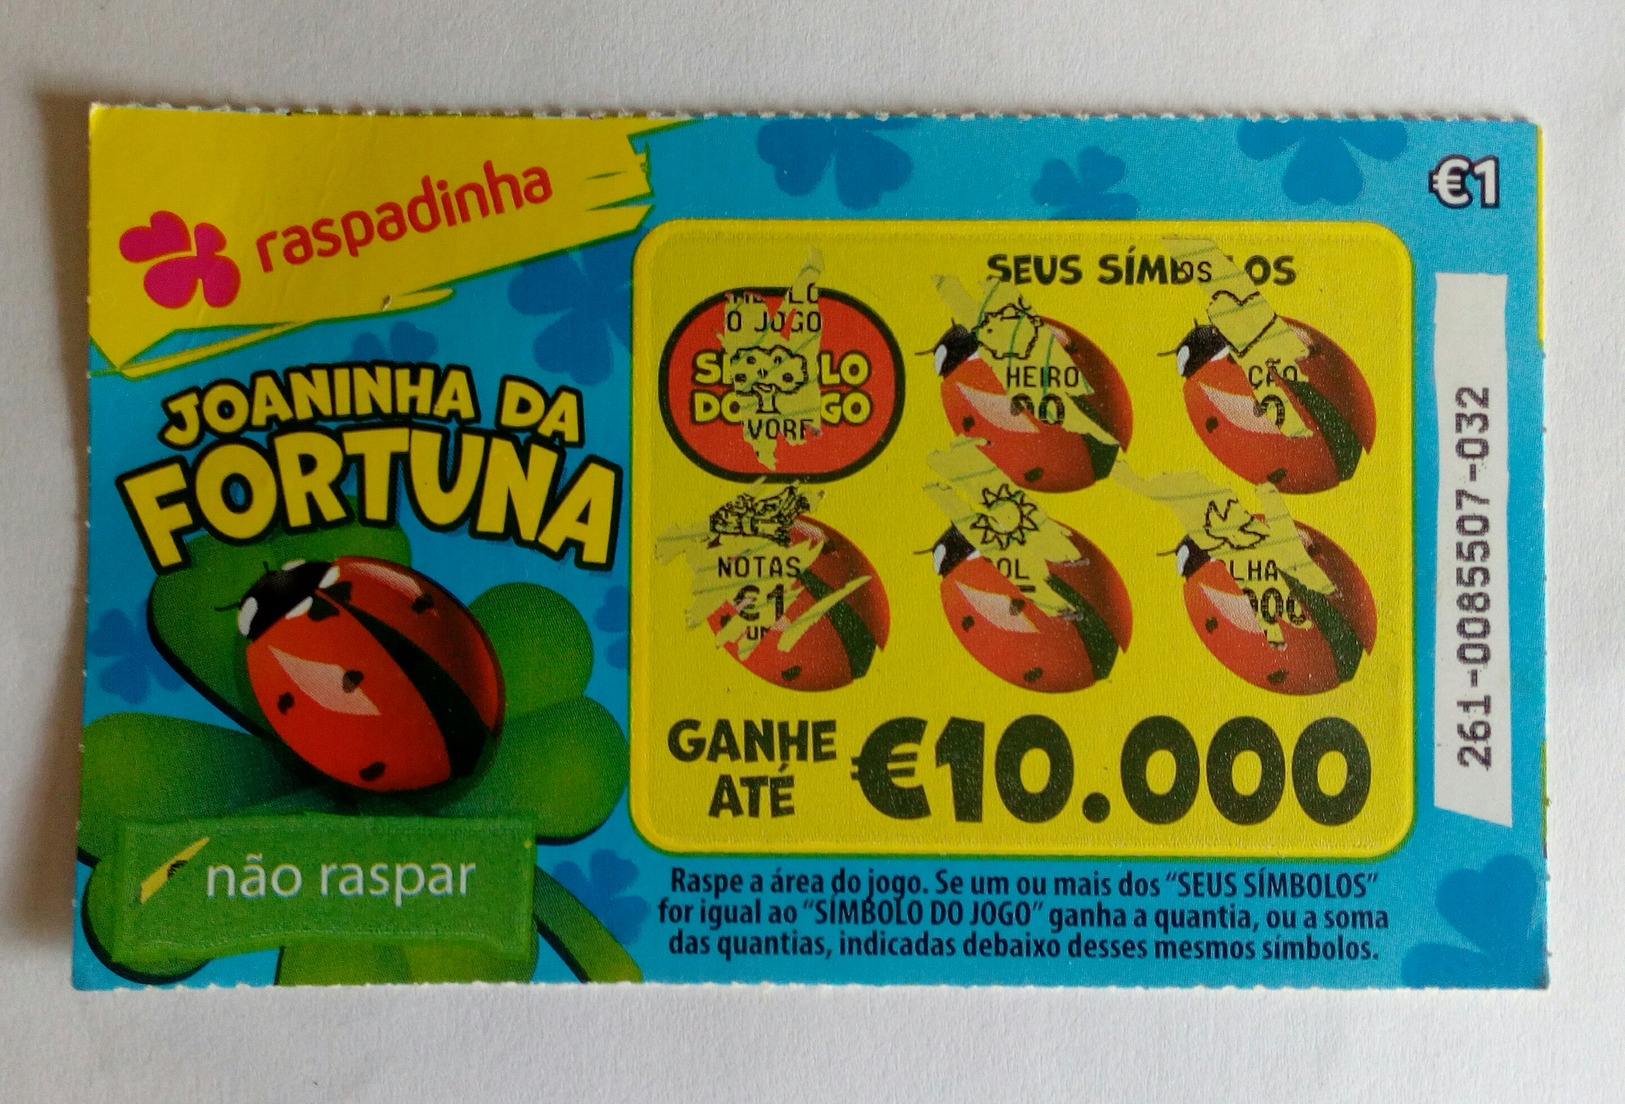 Billet De Loterie Instantanée,  Joaninha Da Fortuna. Portugal - Lottery Tickets